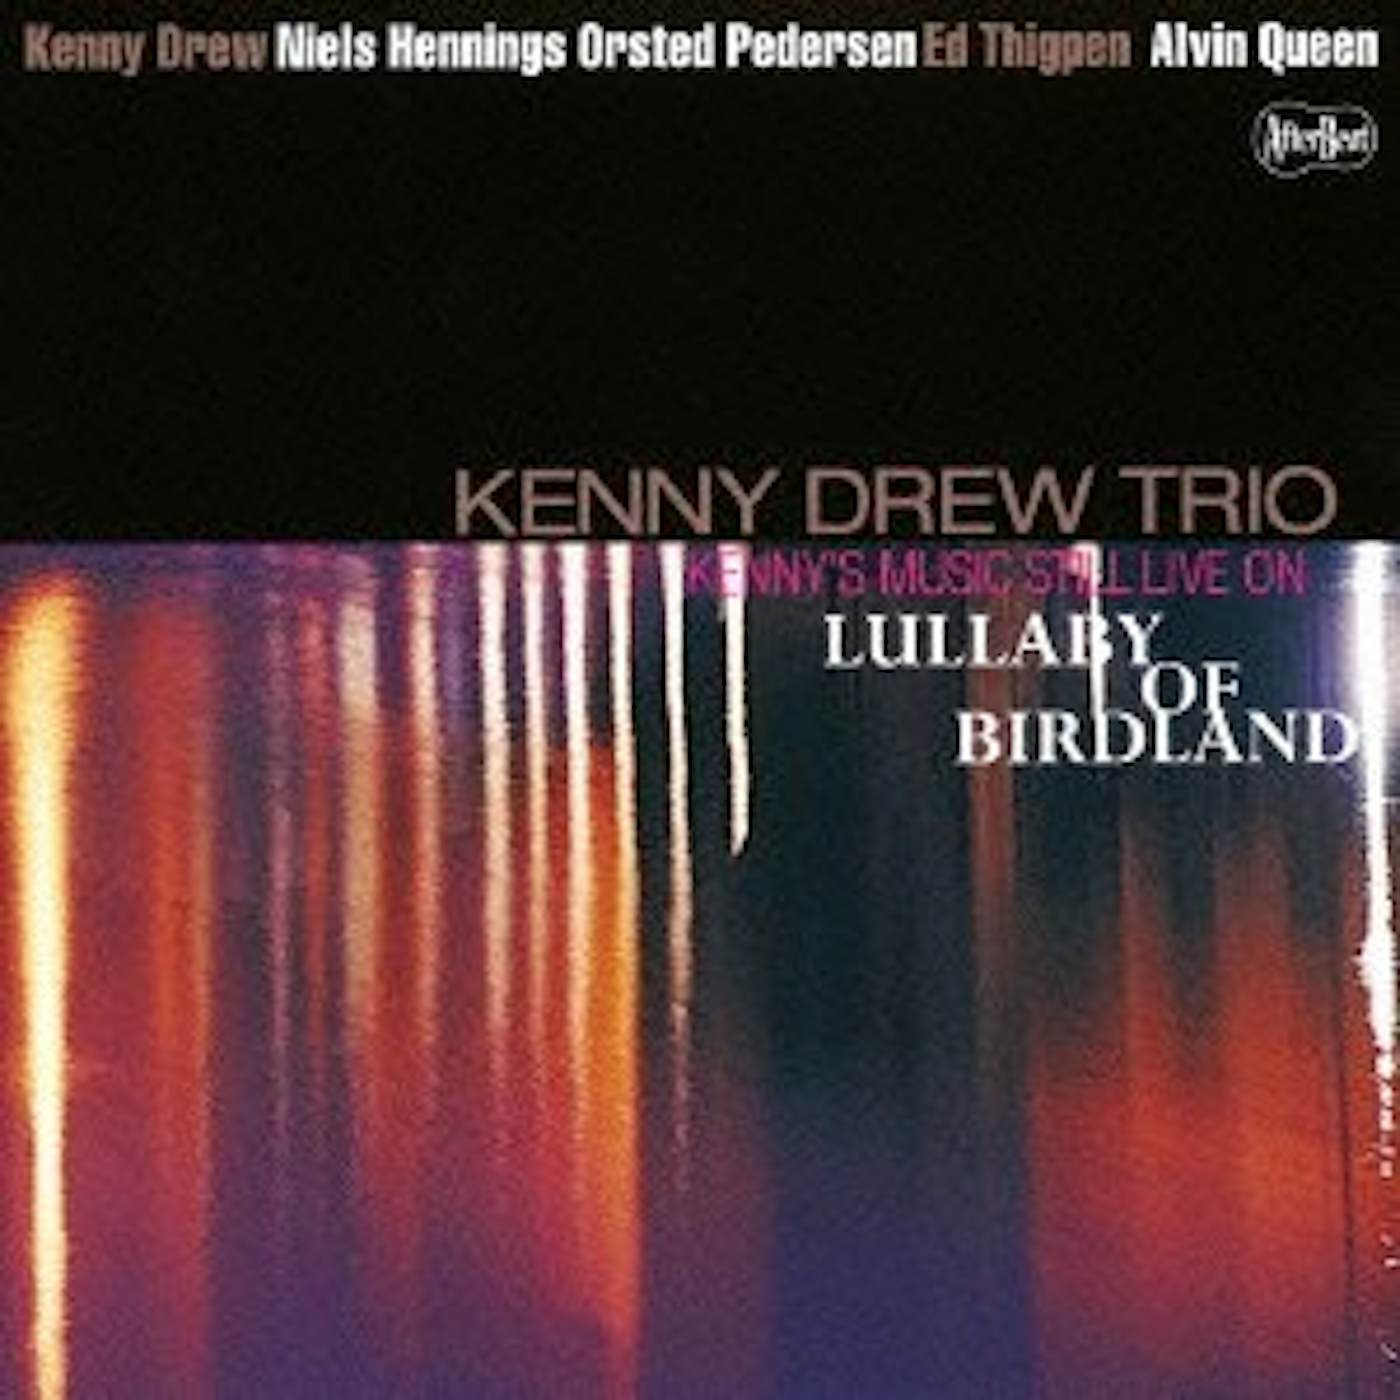 Kenny Drew MUSIC STILL LIVE ON CD